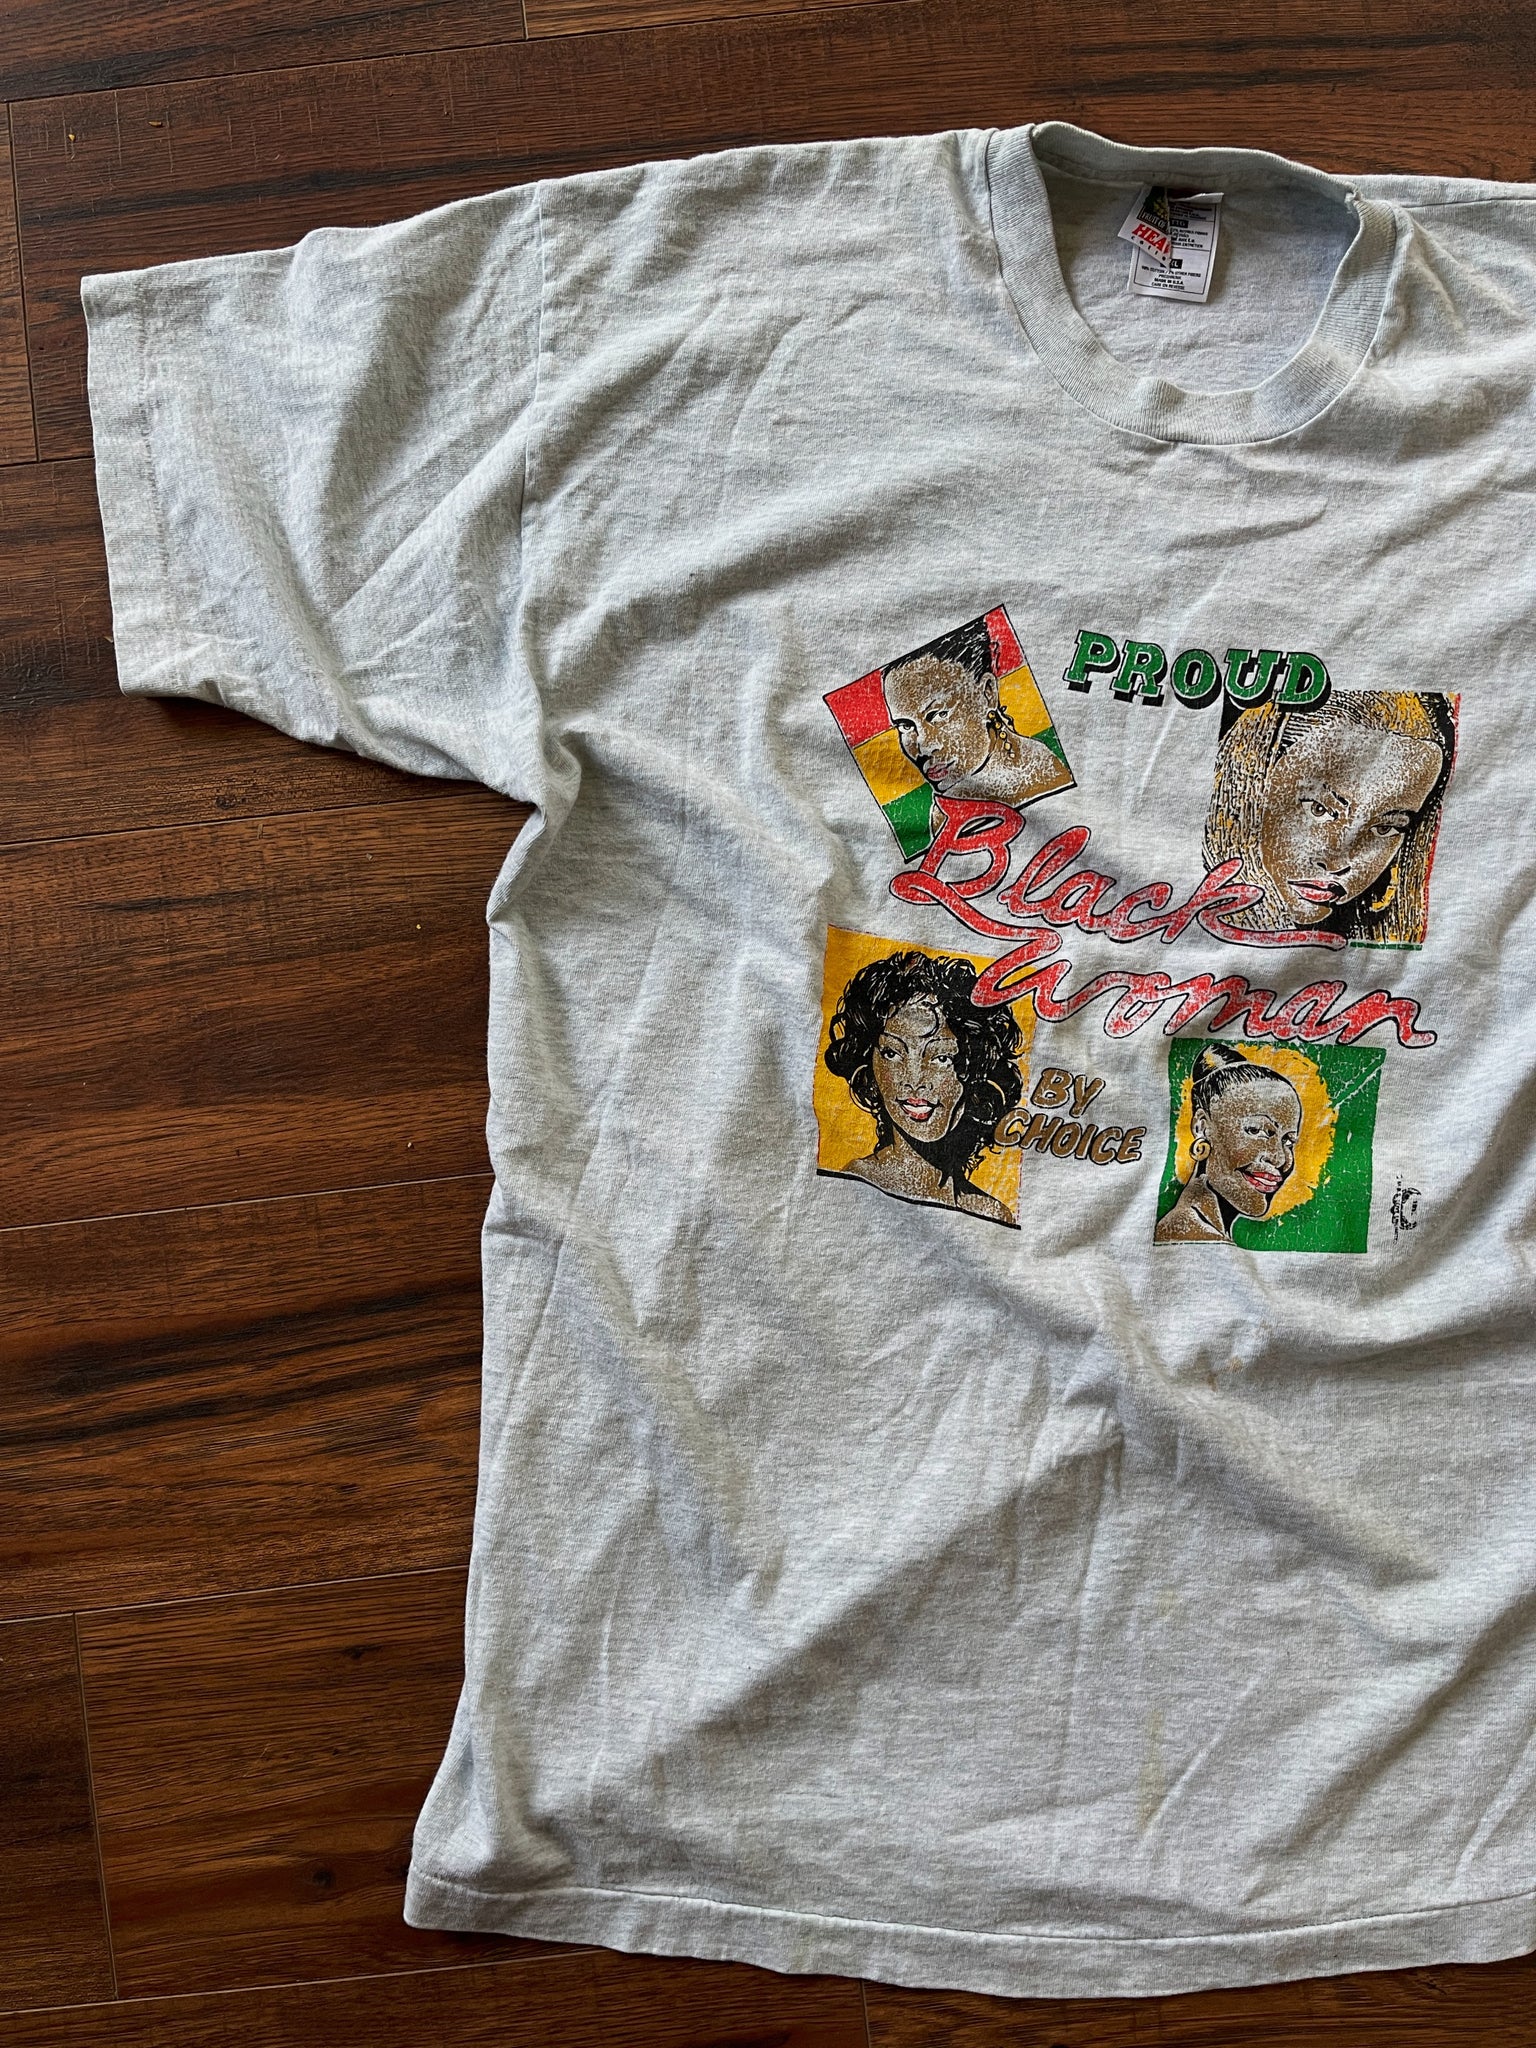 Vintage "Proud Black Woman By Choice" T-Shirt (1990's)